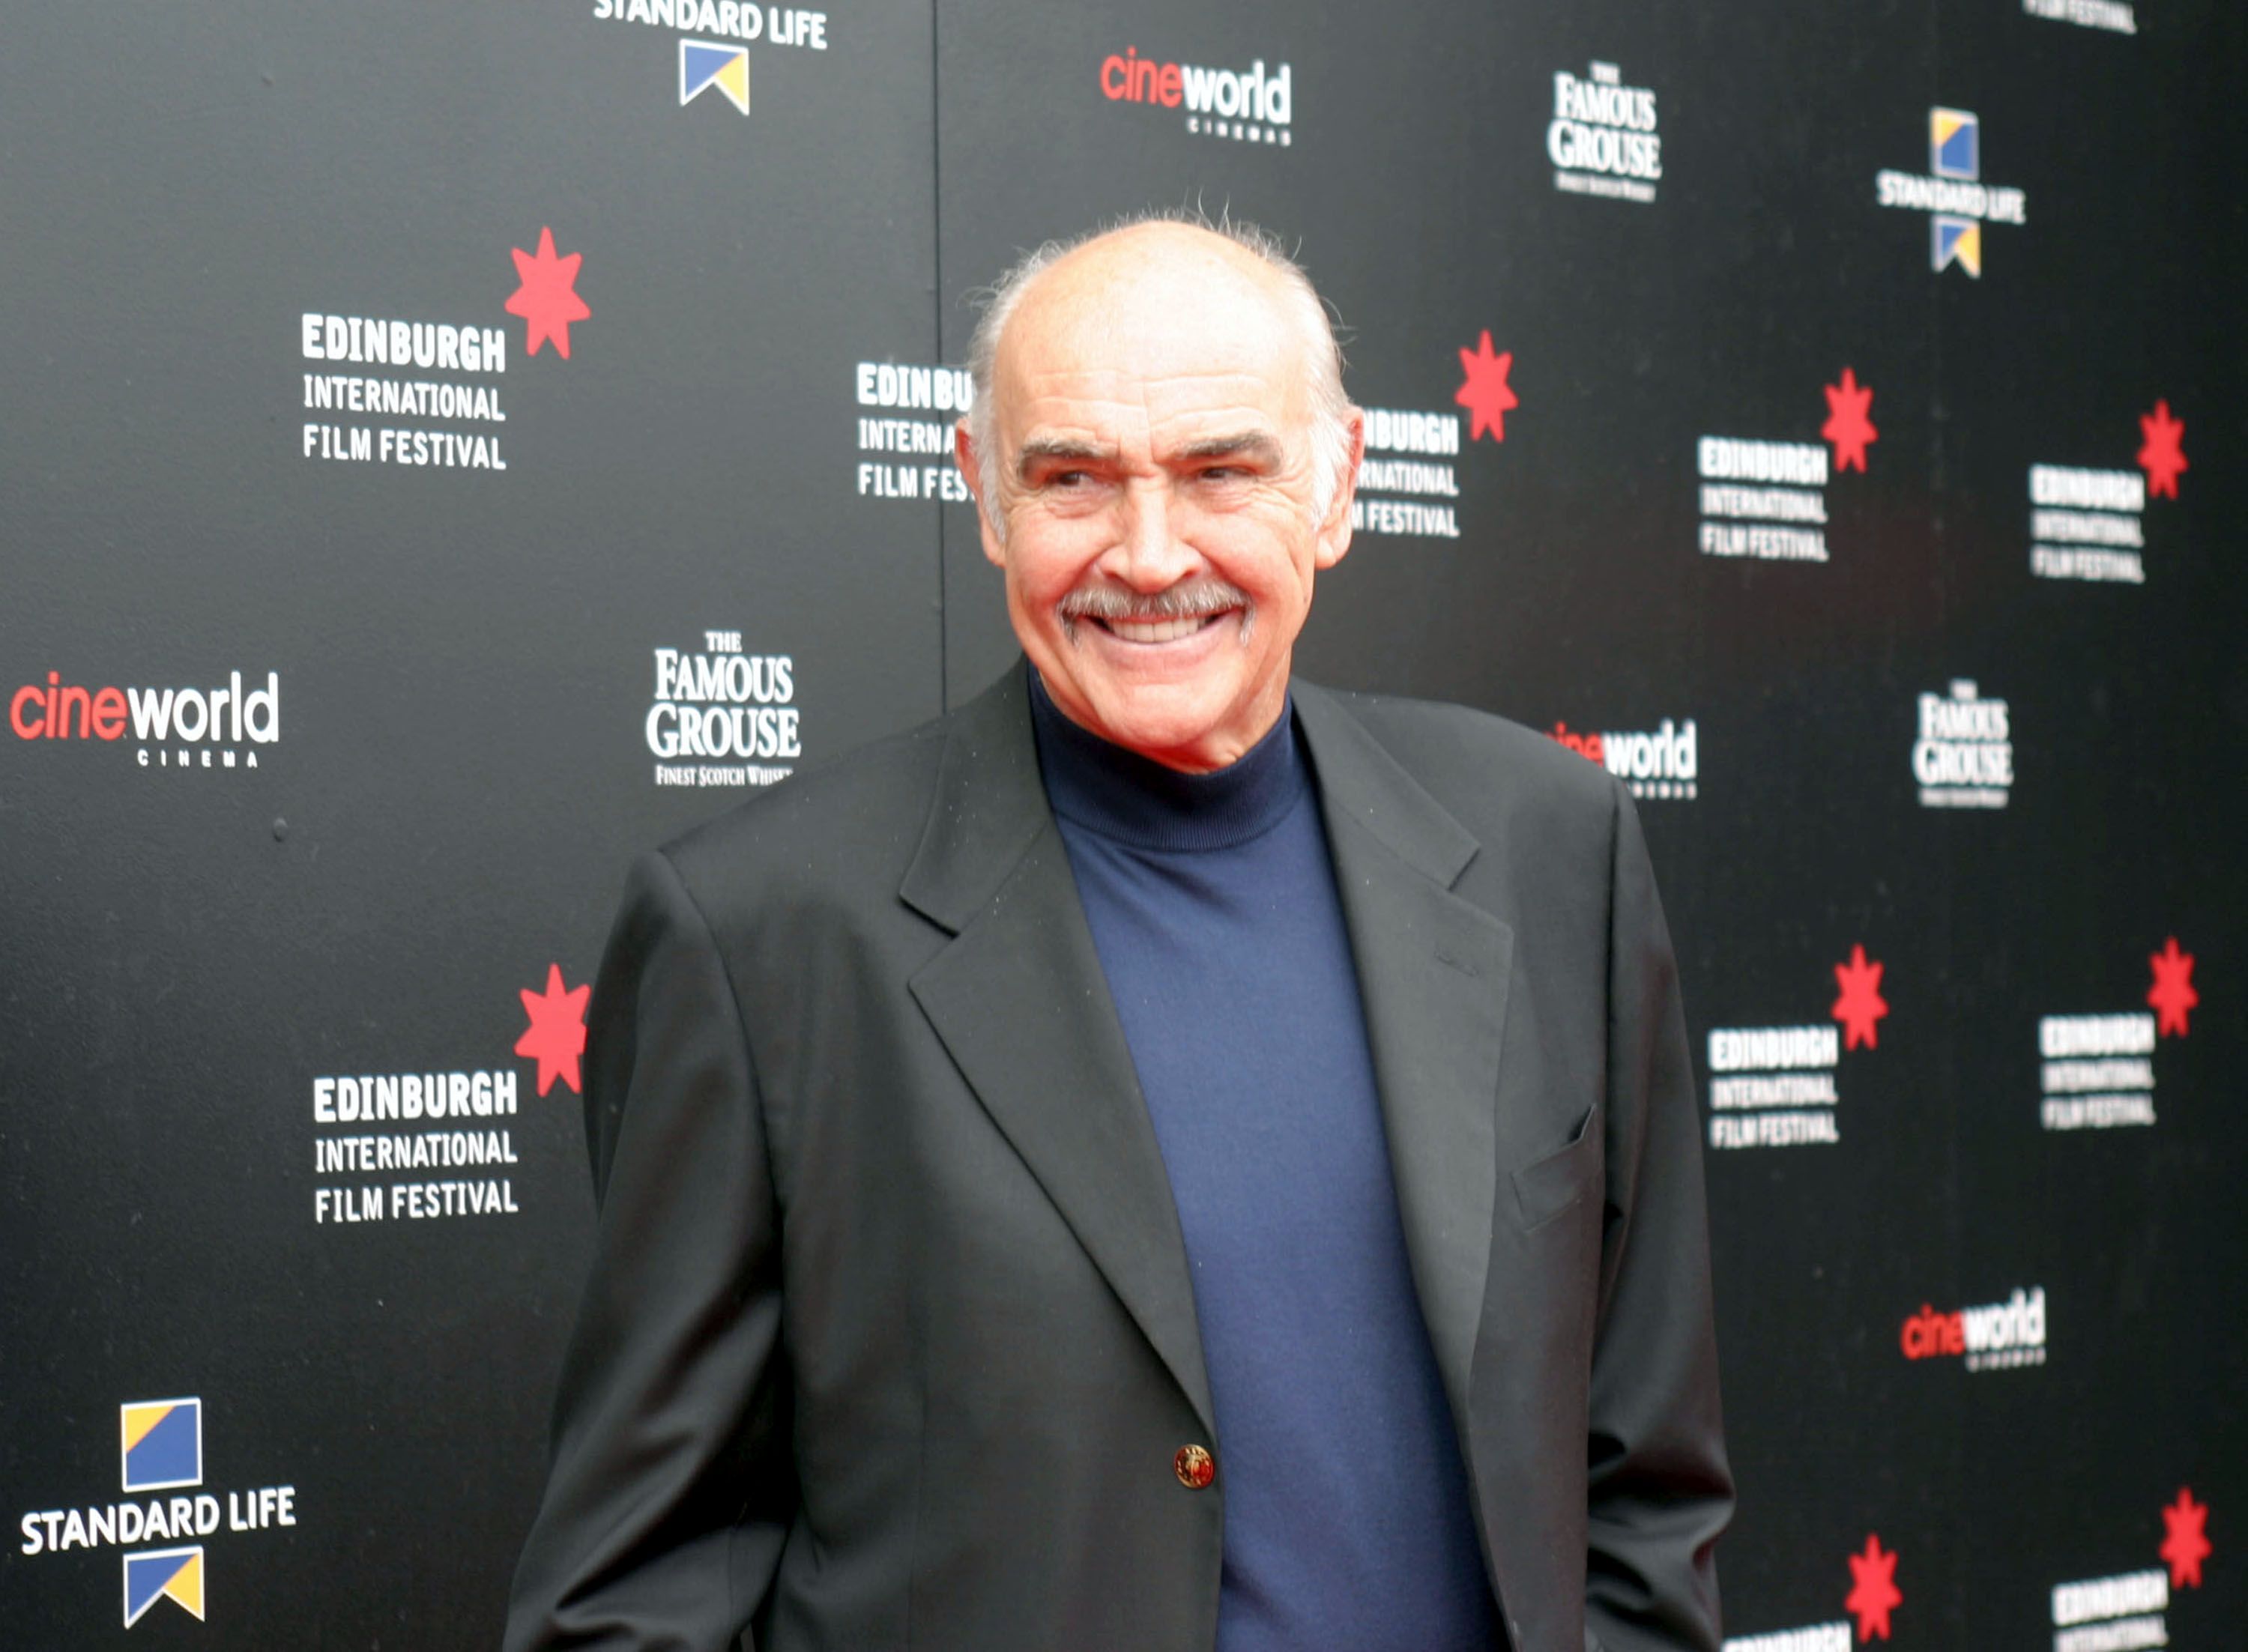 Sean Connery during the Edinburgh International Film Festival at Cineworld in Edinburgh, Scotland, Great Britain | Photo: Marc Marnie/FilmMagic